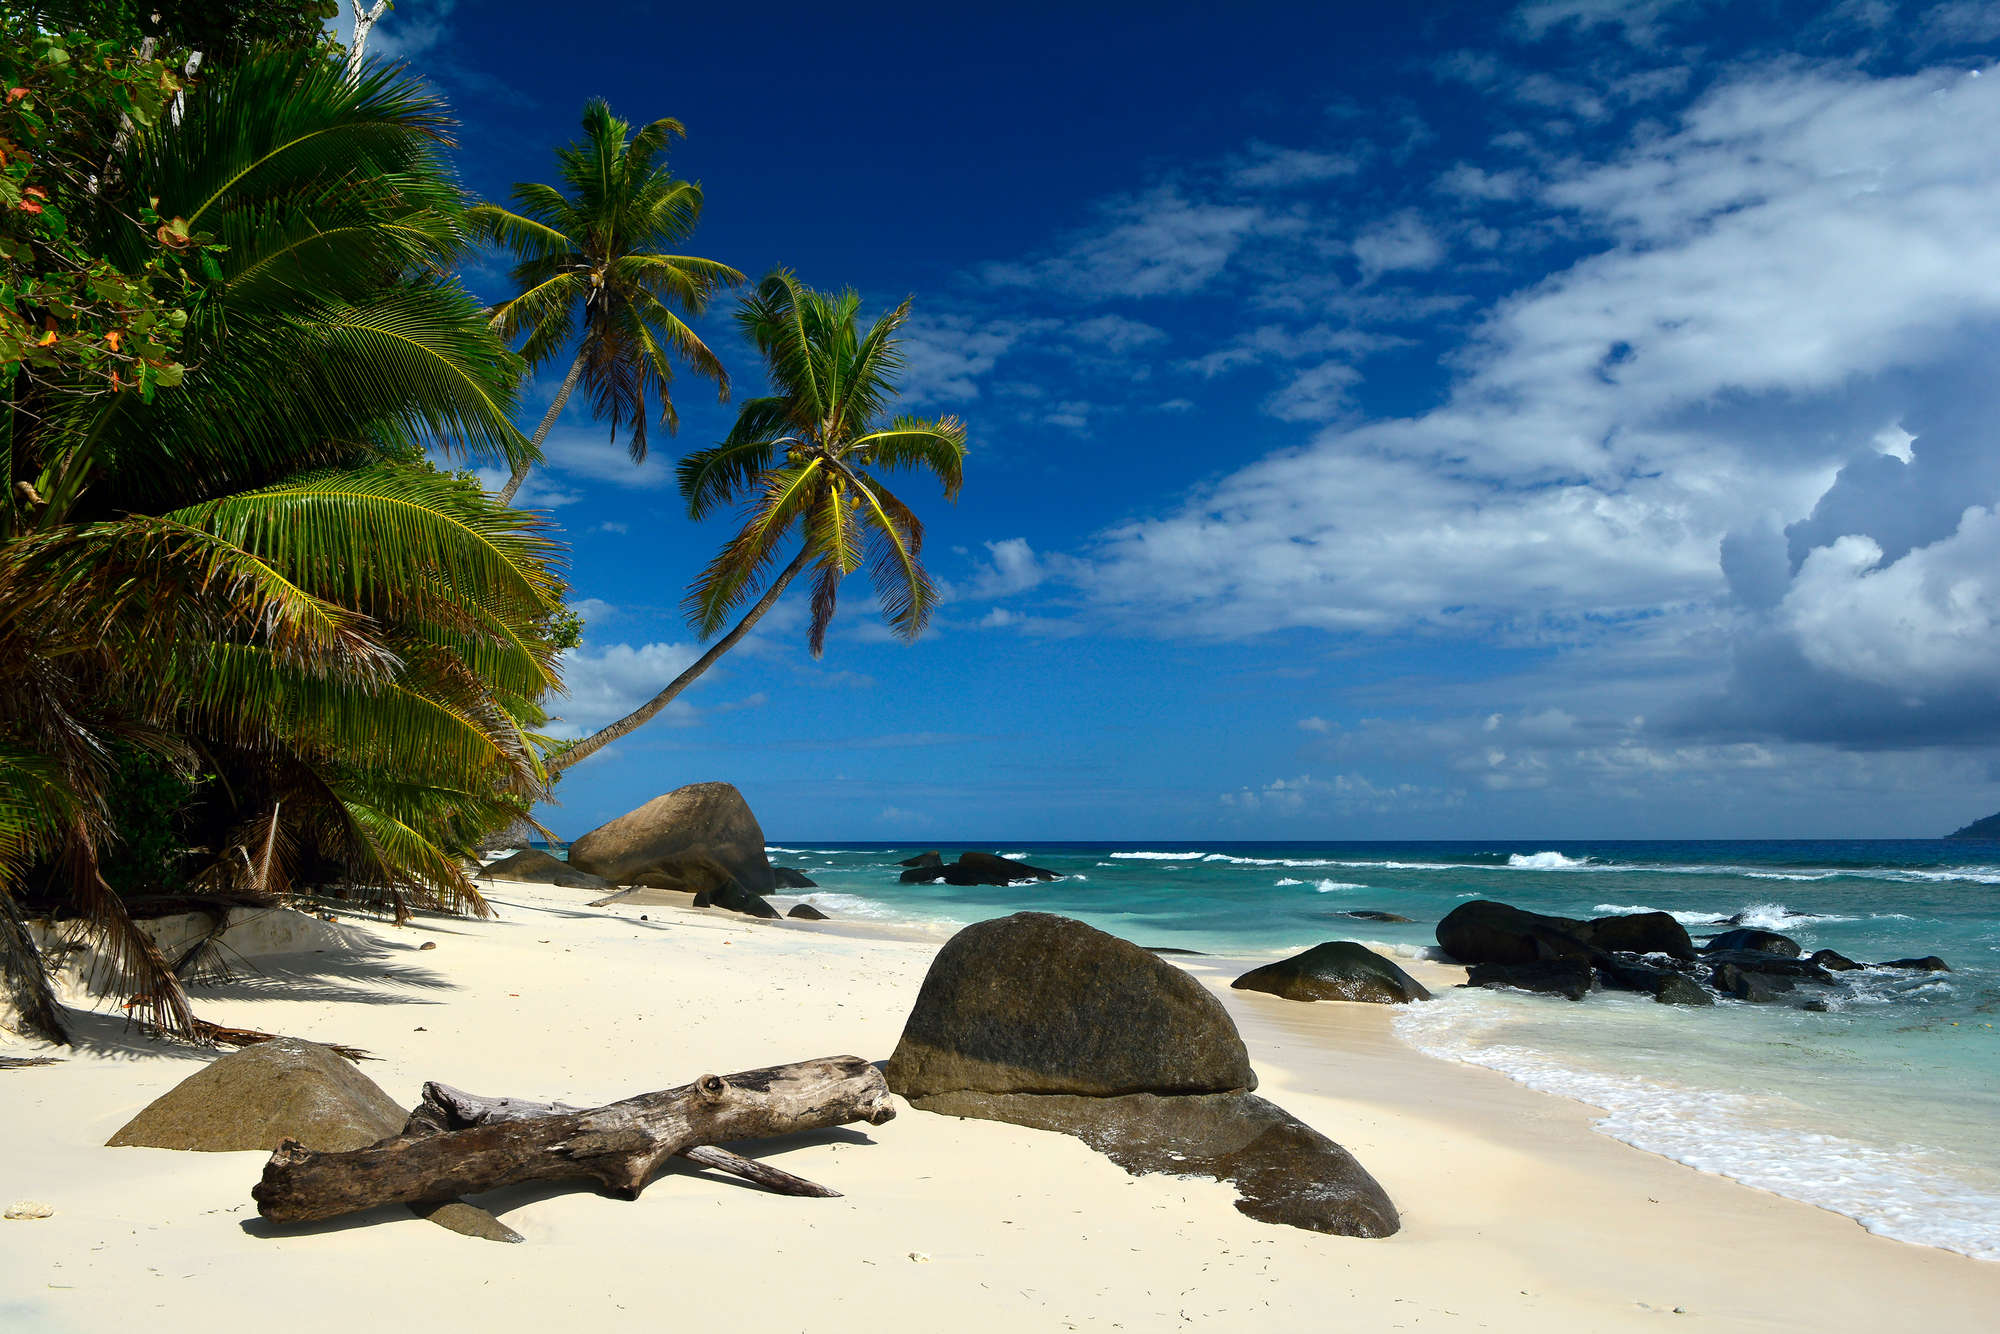             South Seas mural Seychelles palm trees & beach on premium smooth non-woven
        